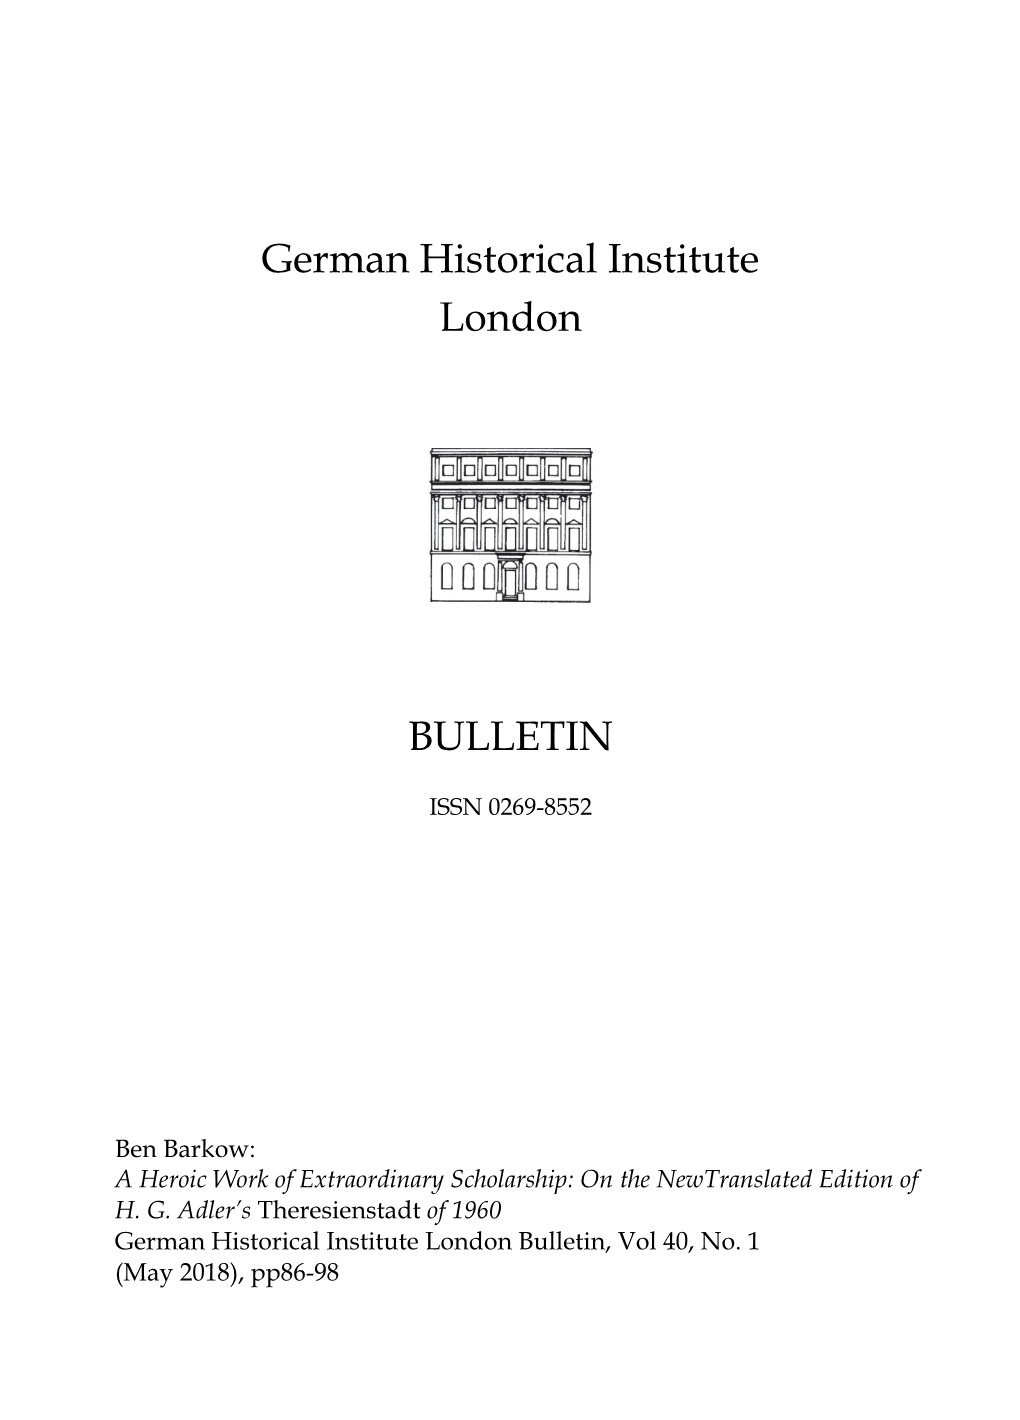 German Historical Institute London Bulletin, Vol 40, No